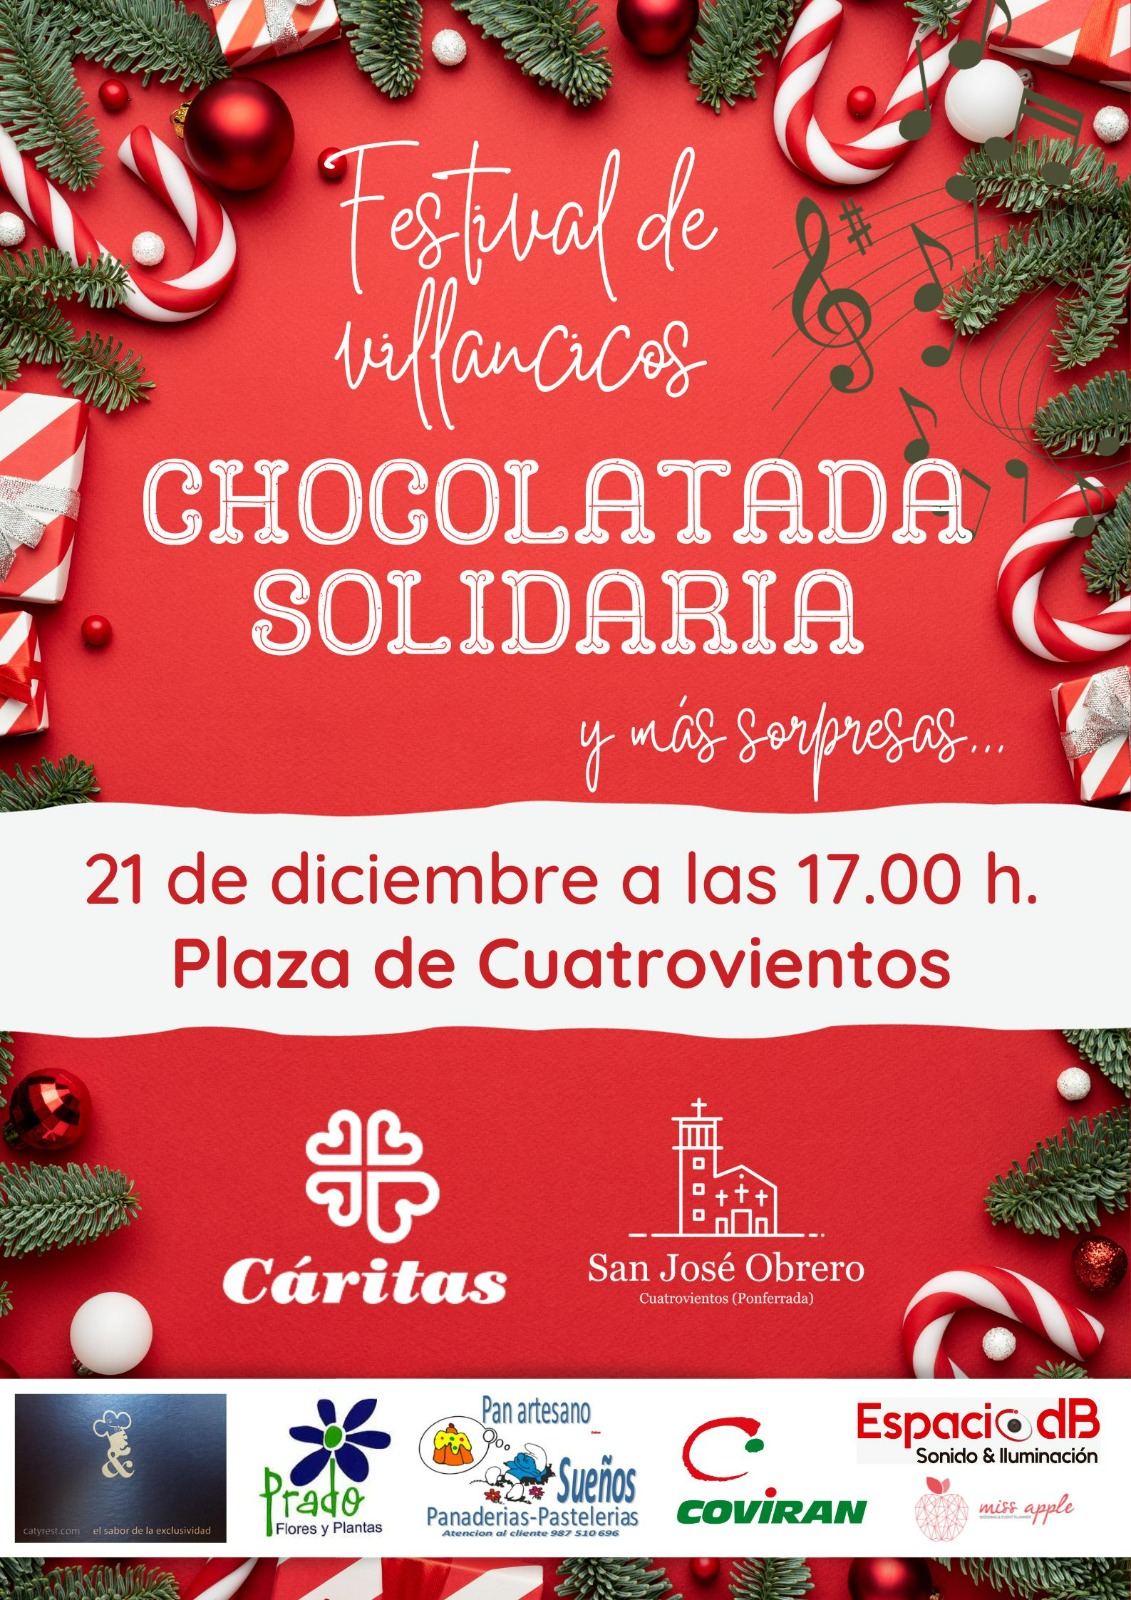 La parroquia de San José Obrero de Ponferrada organiza una chocolatada solidaria a favor de Cáritas mañana jueves 21 de diciembre 18